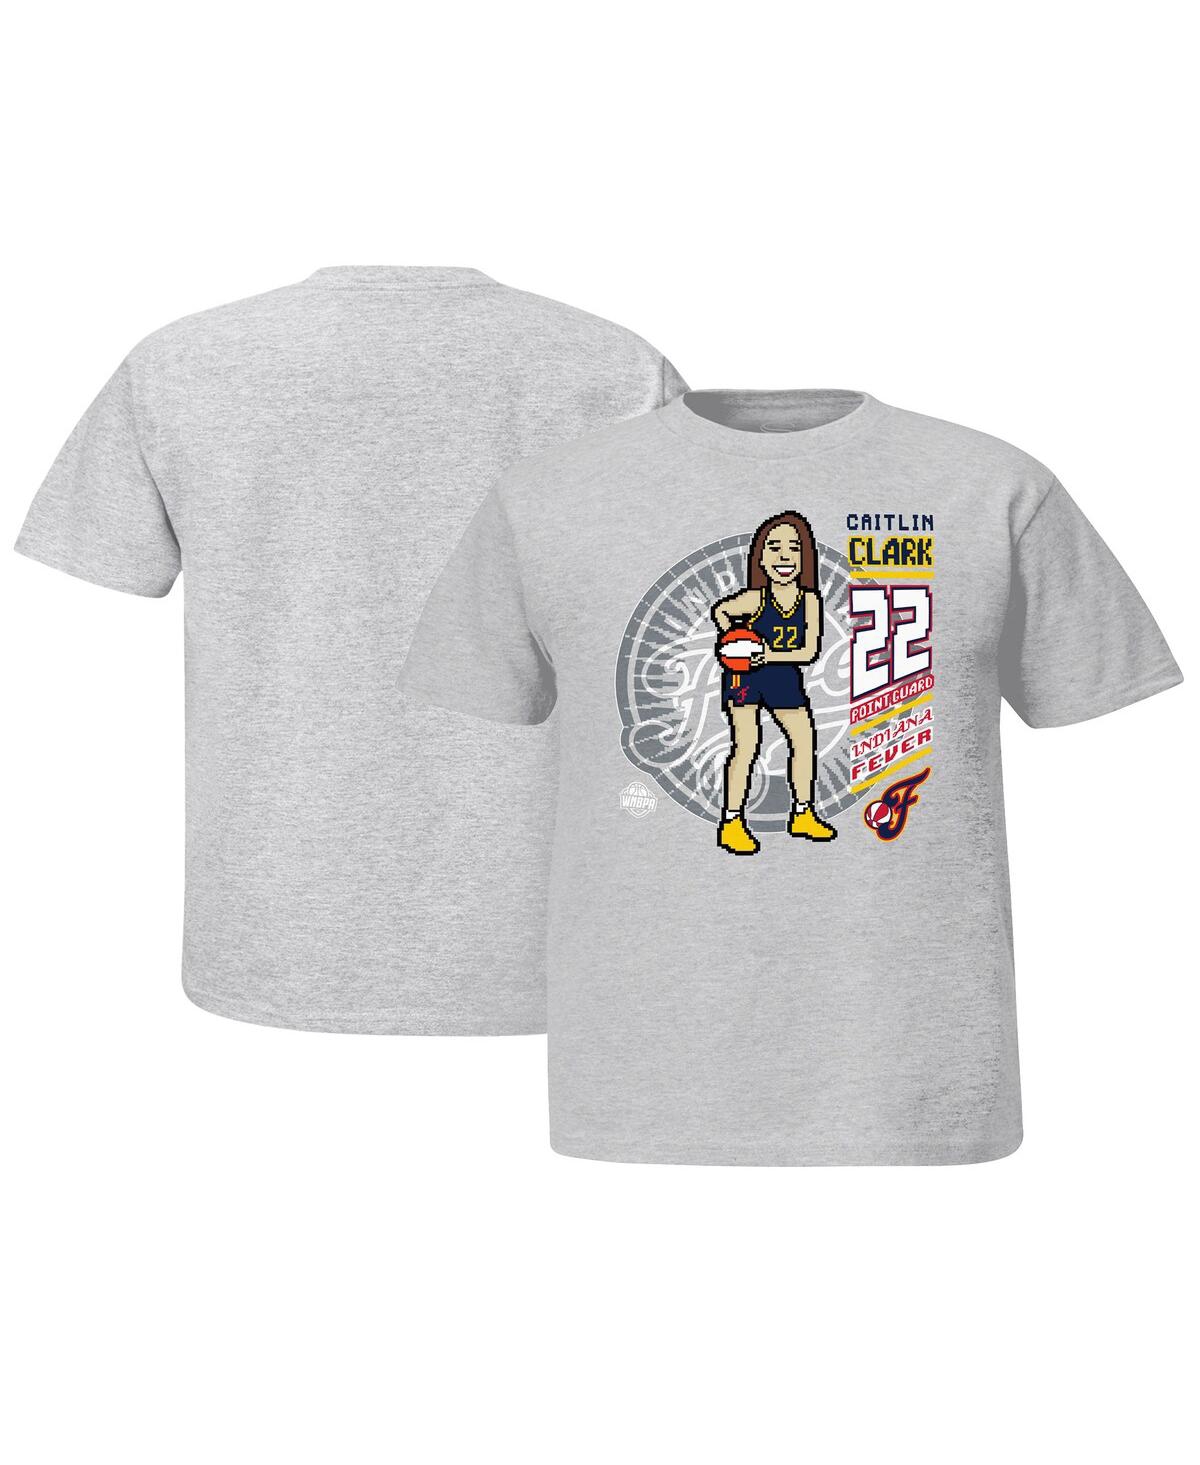 Stadium Essentials Youth Caitlin Clark Heather Gray Indiana Fever Player 8-bit T-shirt